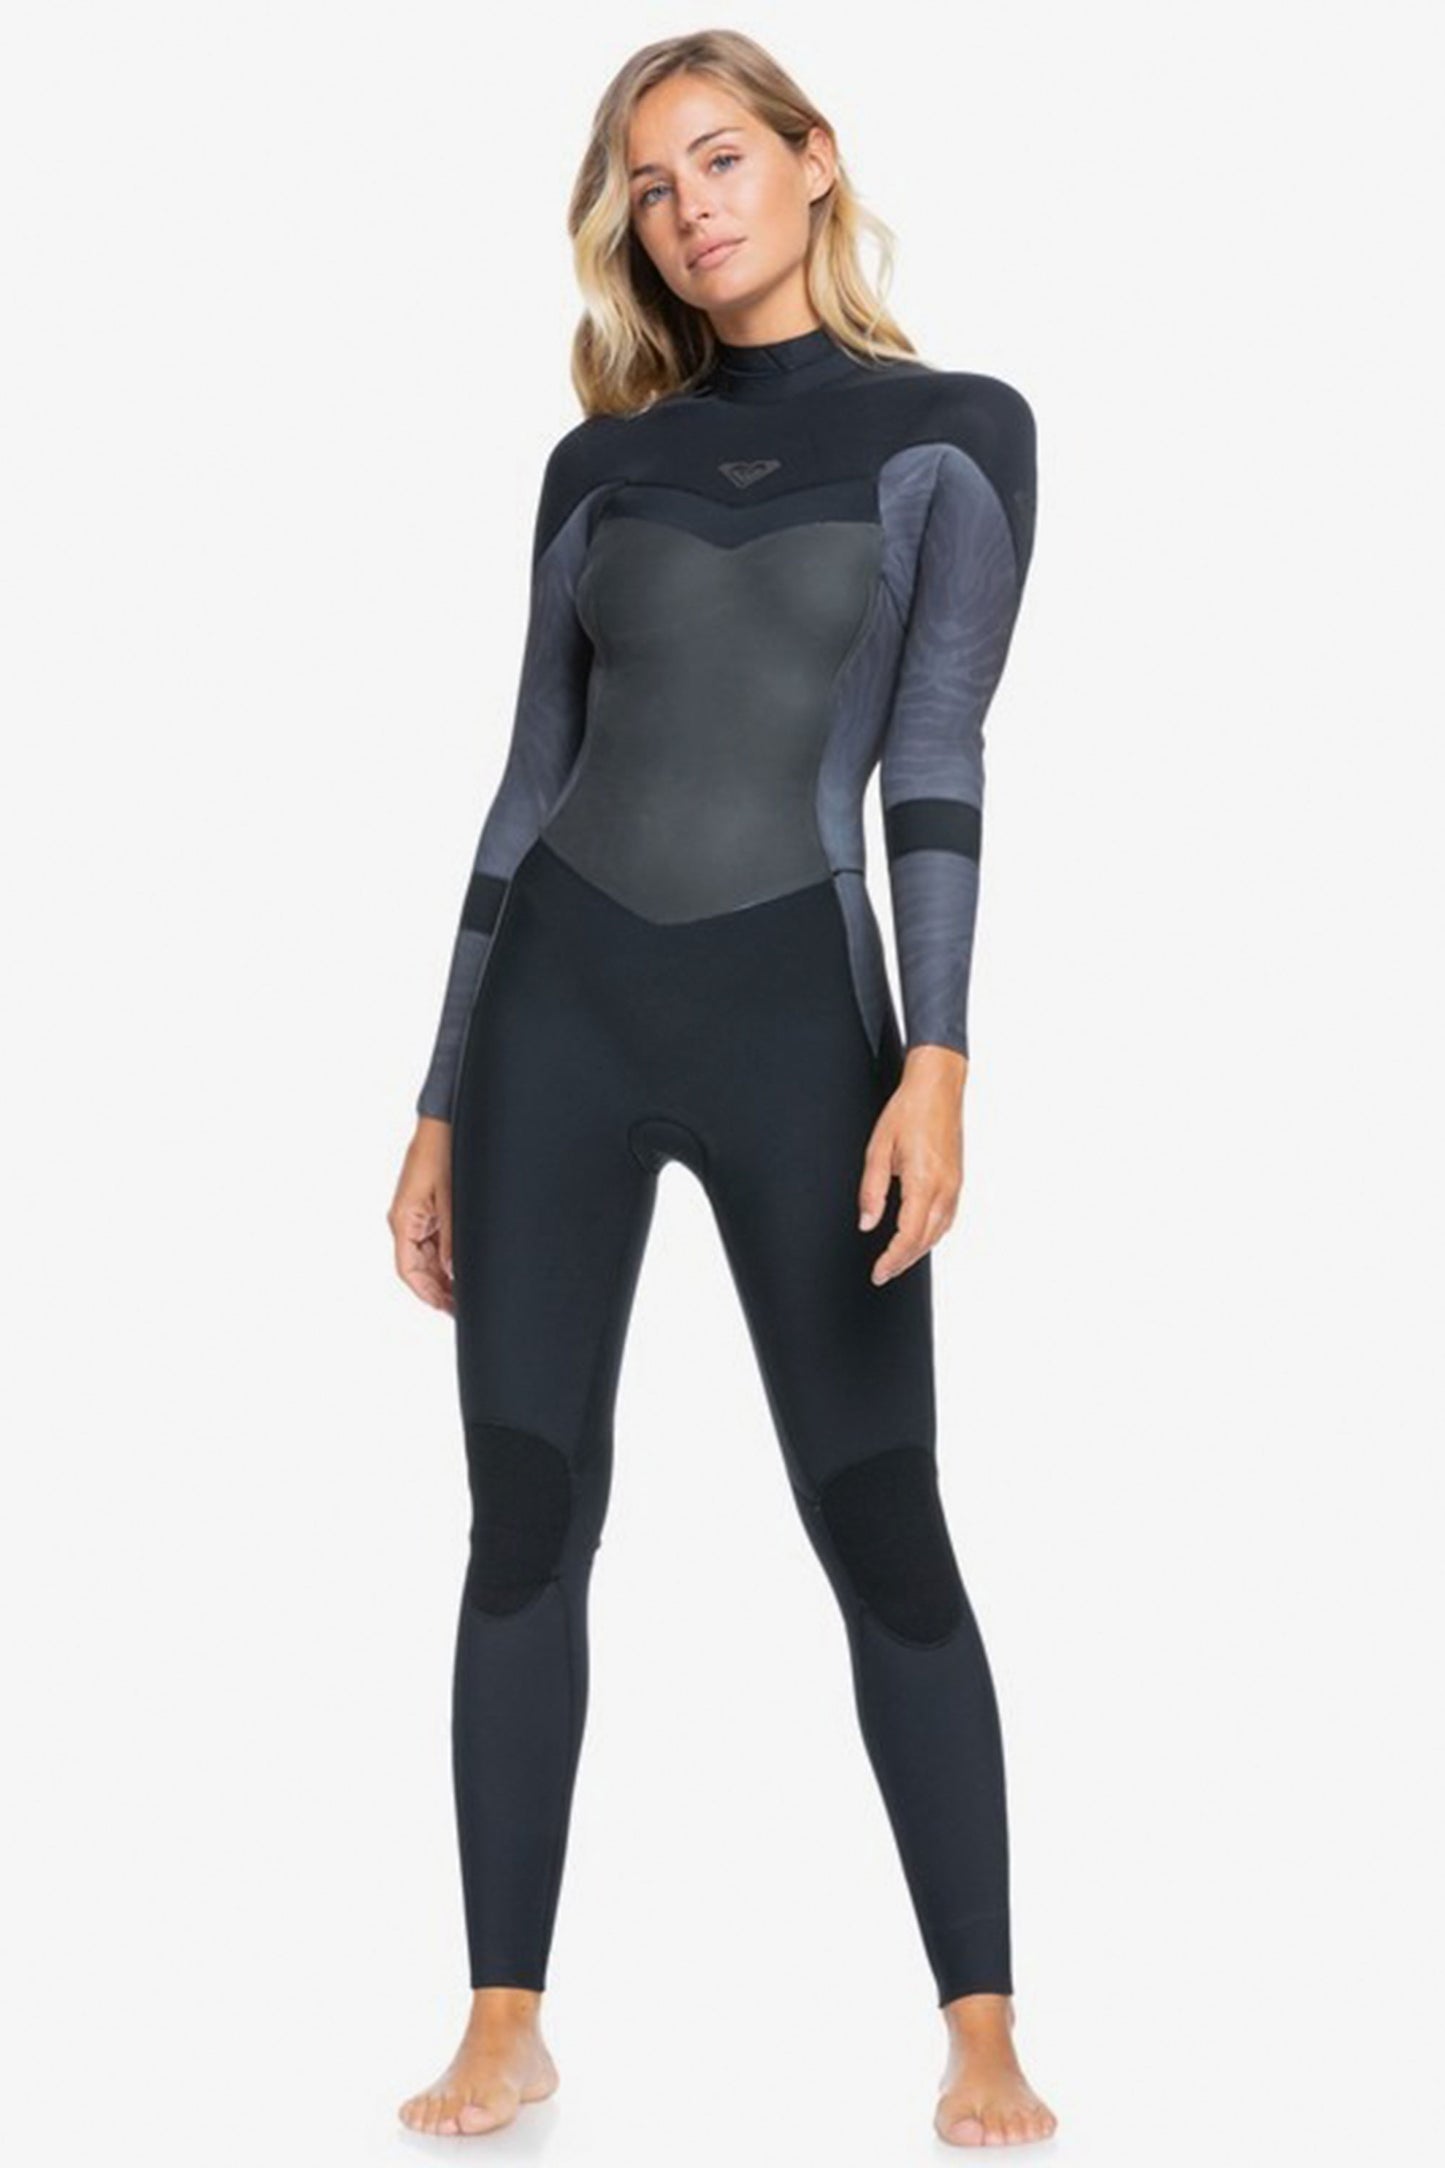 Pukas-Surf-Shop-roxy-wetsuit-Syncro-5-4-3mm-Back-Zip